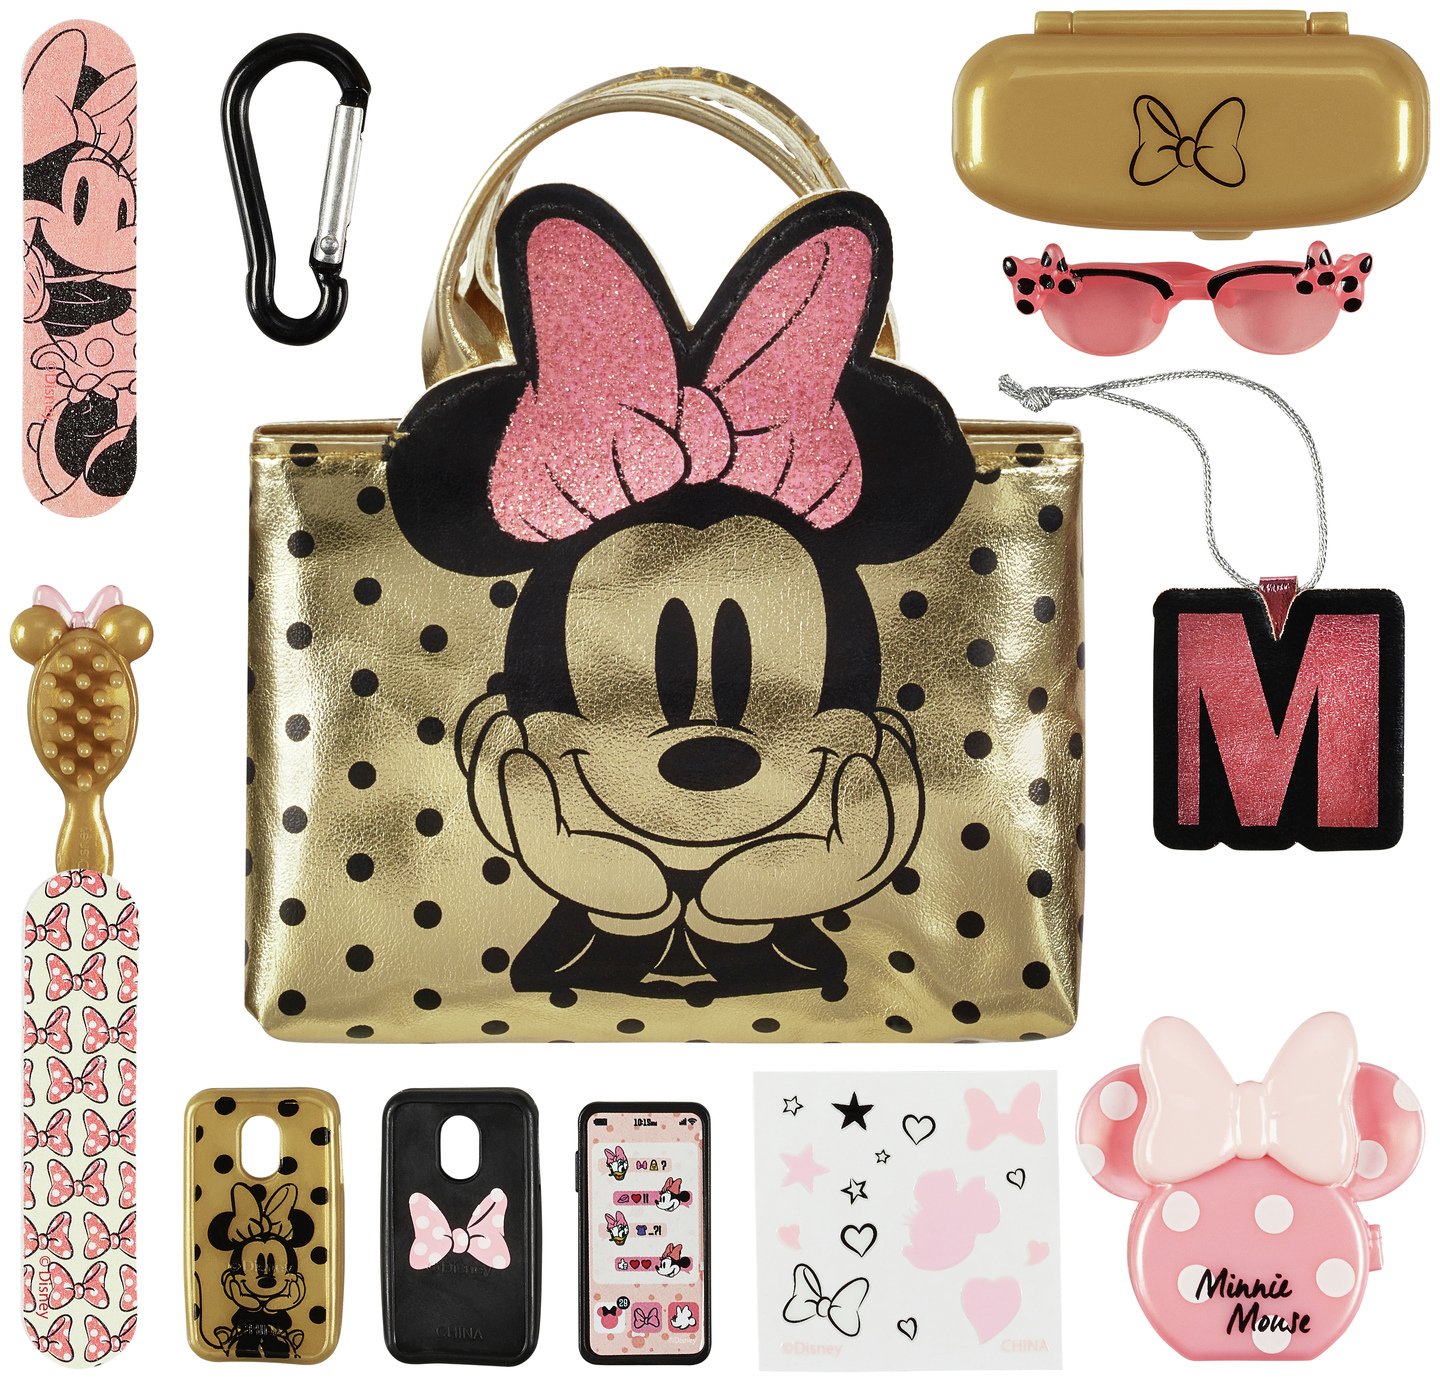 Real Littles Disney Minnie Mouse Miniature Handbag